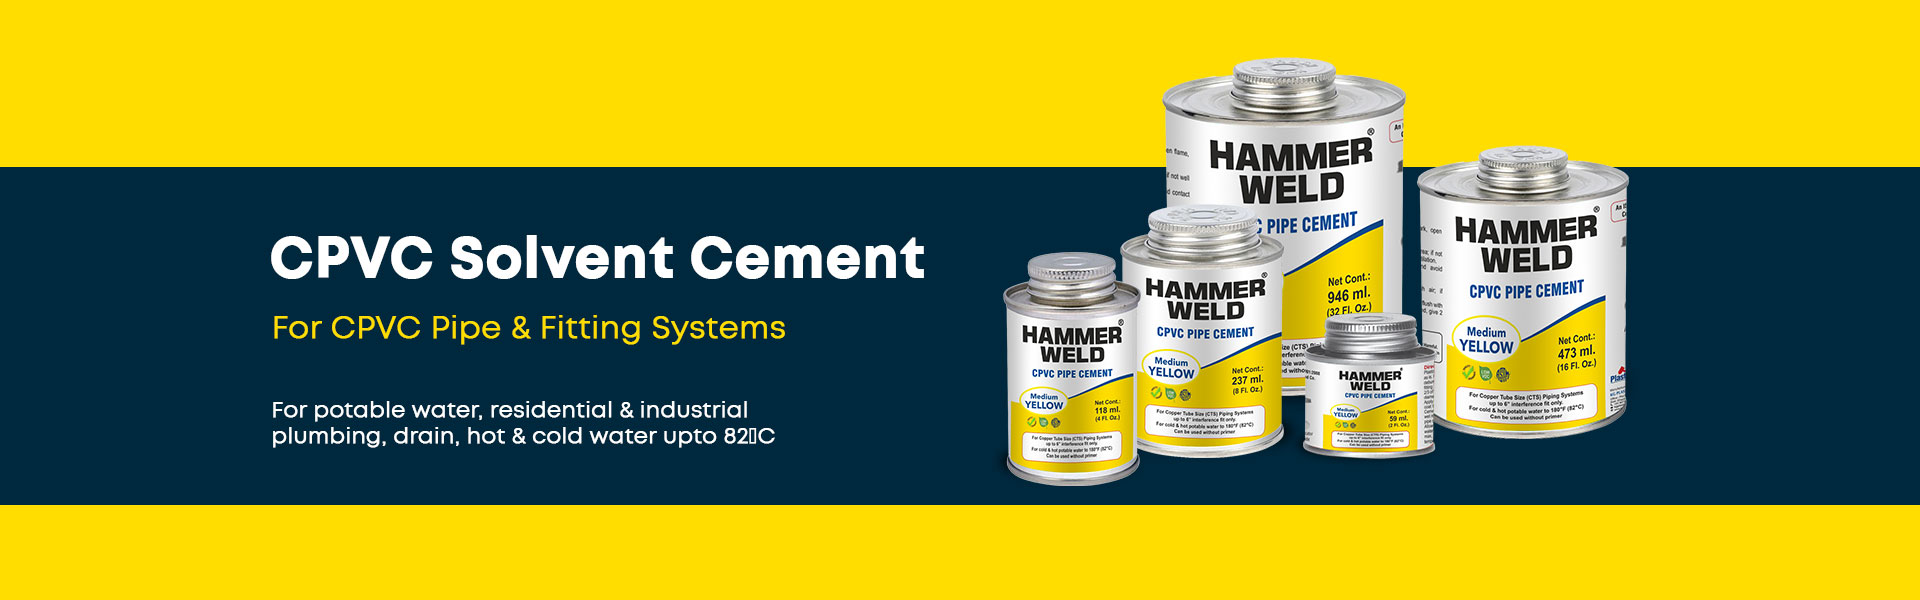 HammerWeld CPVC Pipe Cement